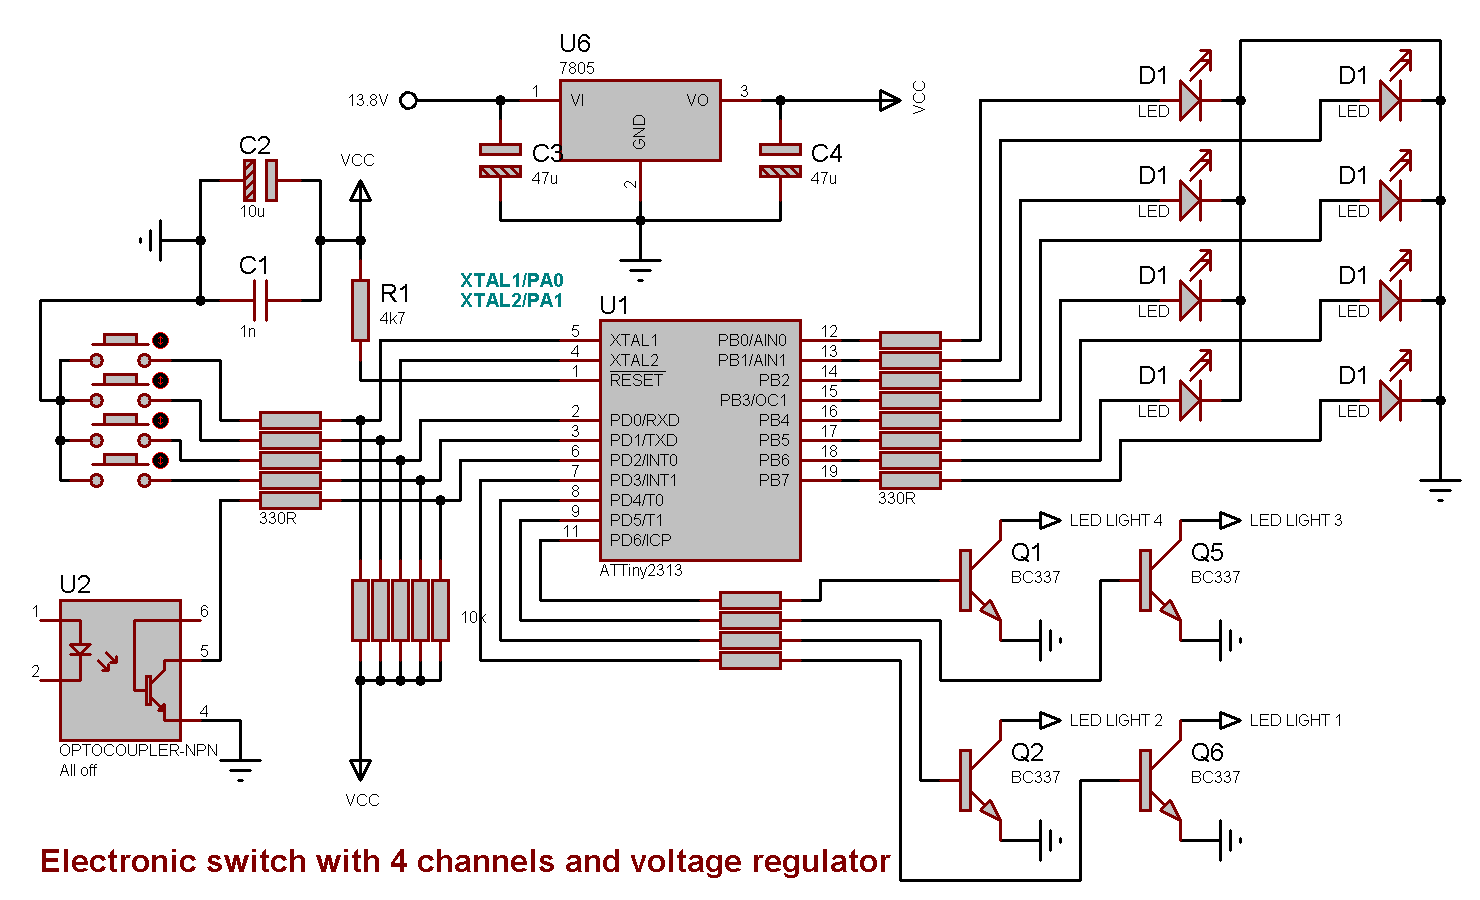 Electronic switch schematics